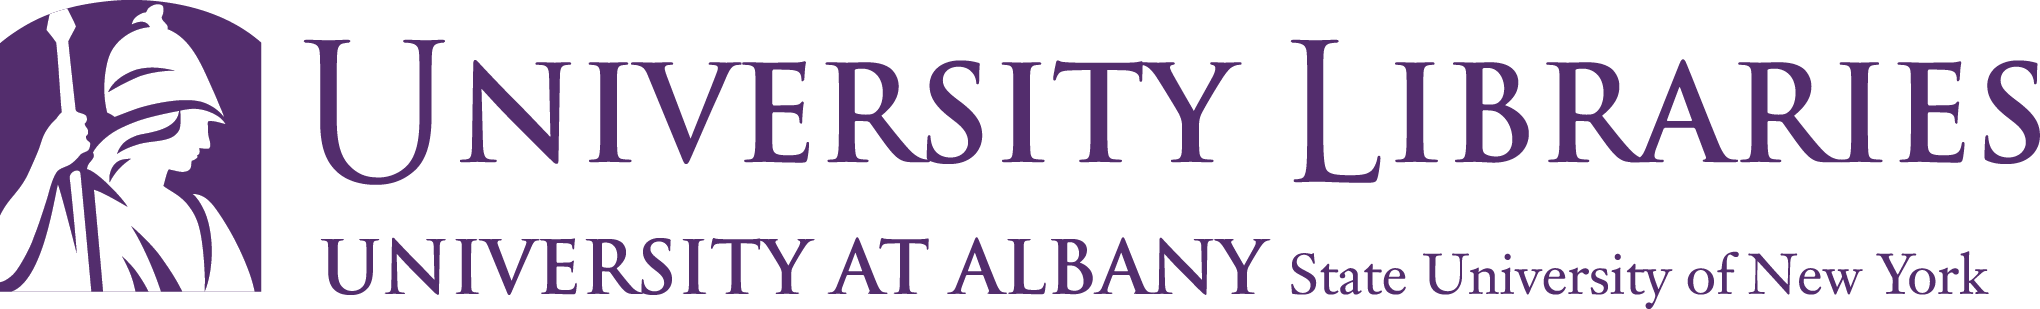 University Libraries, University at Albany